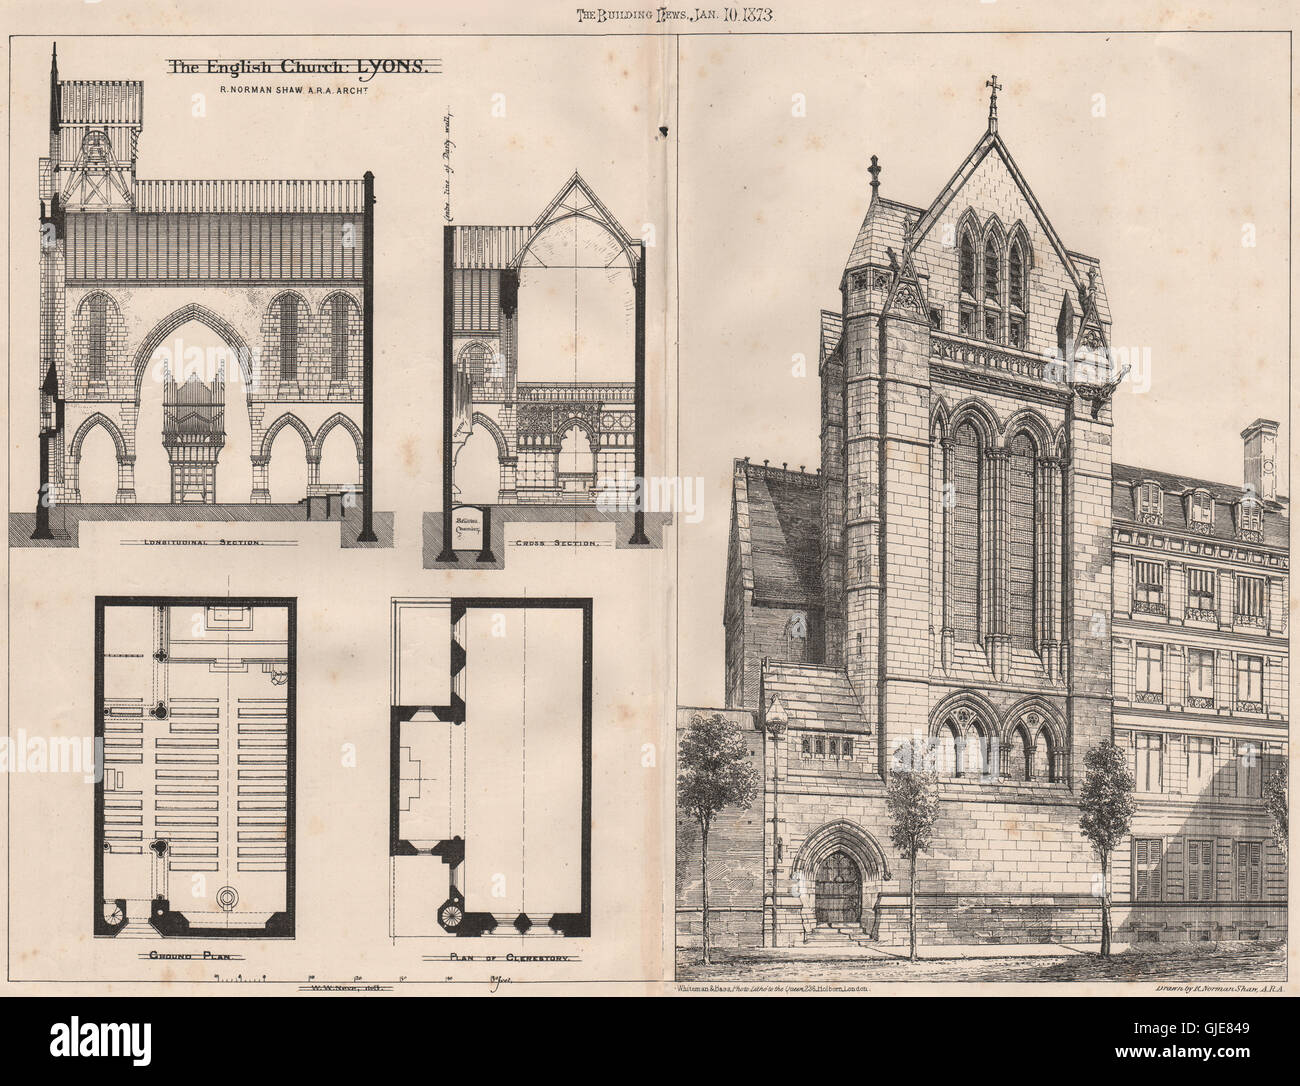 Die englische Kirche, Lyon; R. Norman Shaw A.R.A Architekt. Rhône, print 1873 Stockfoto